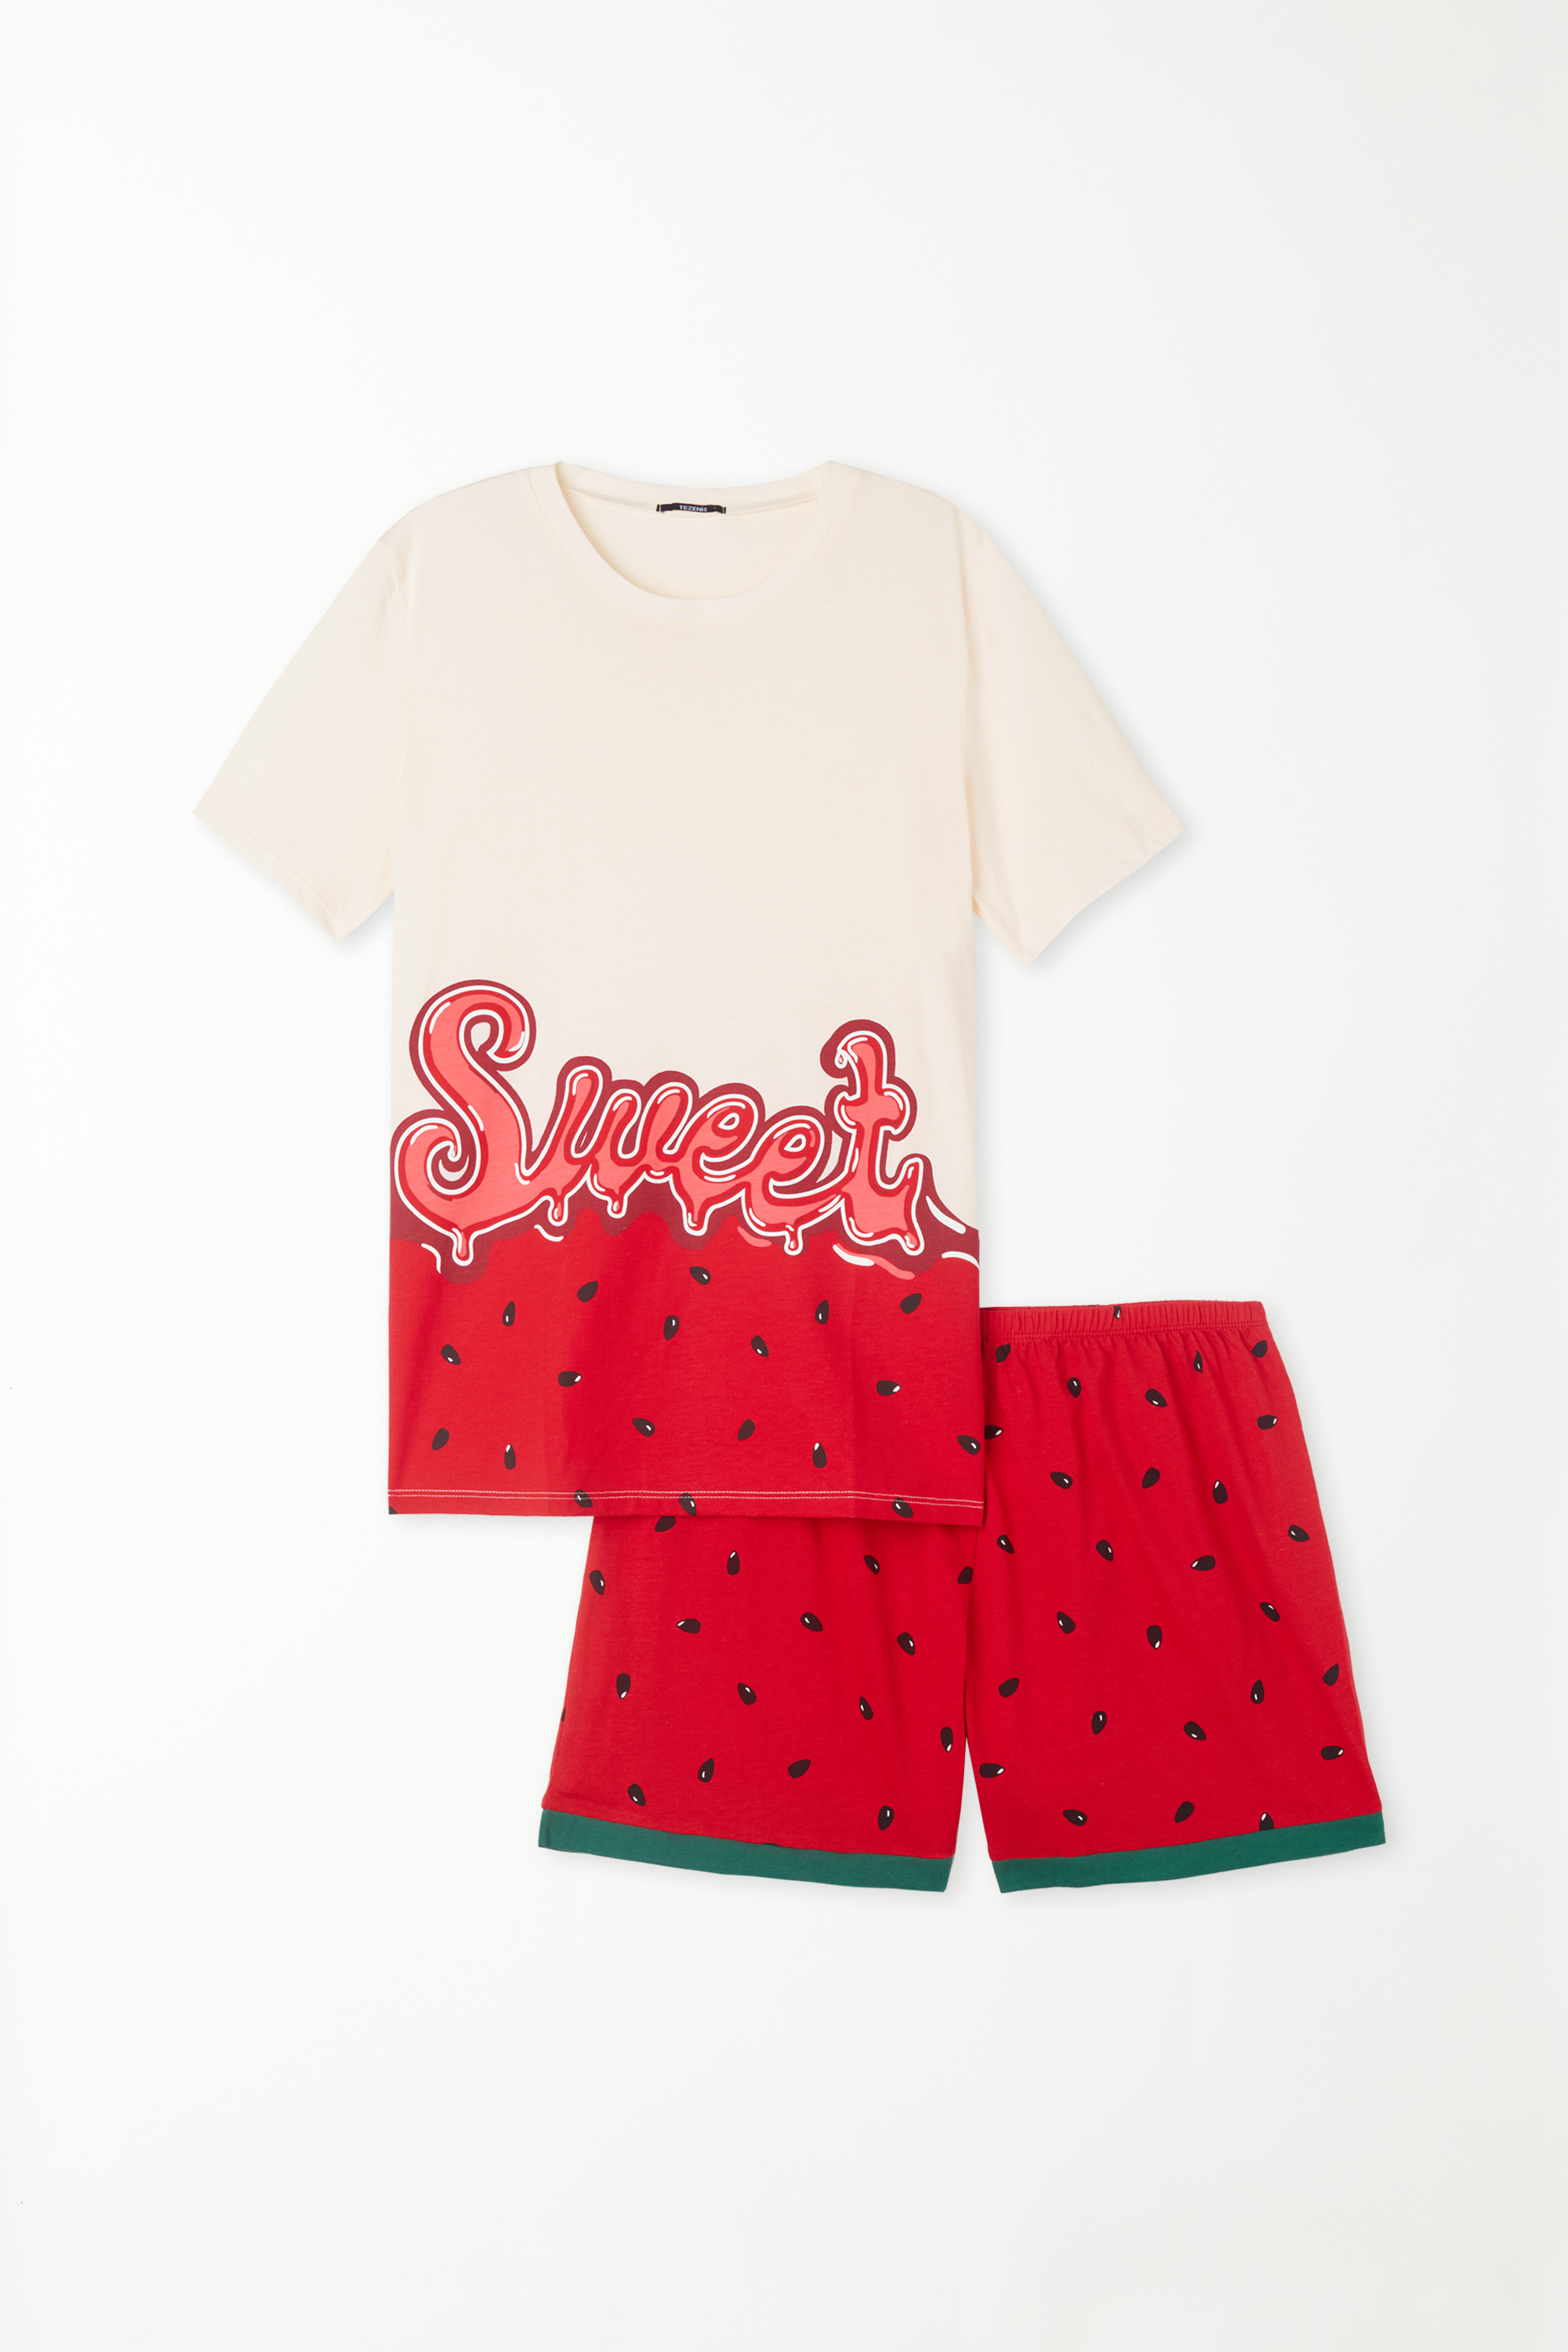 Short Cotton Watermelon Print Pyjamas with Short Sleeves